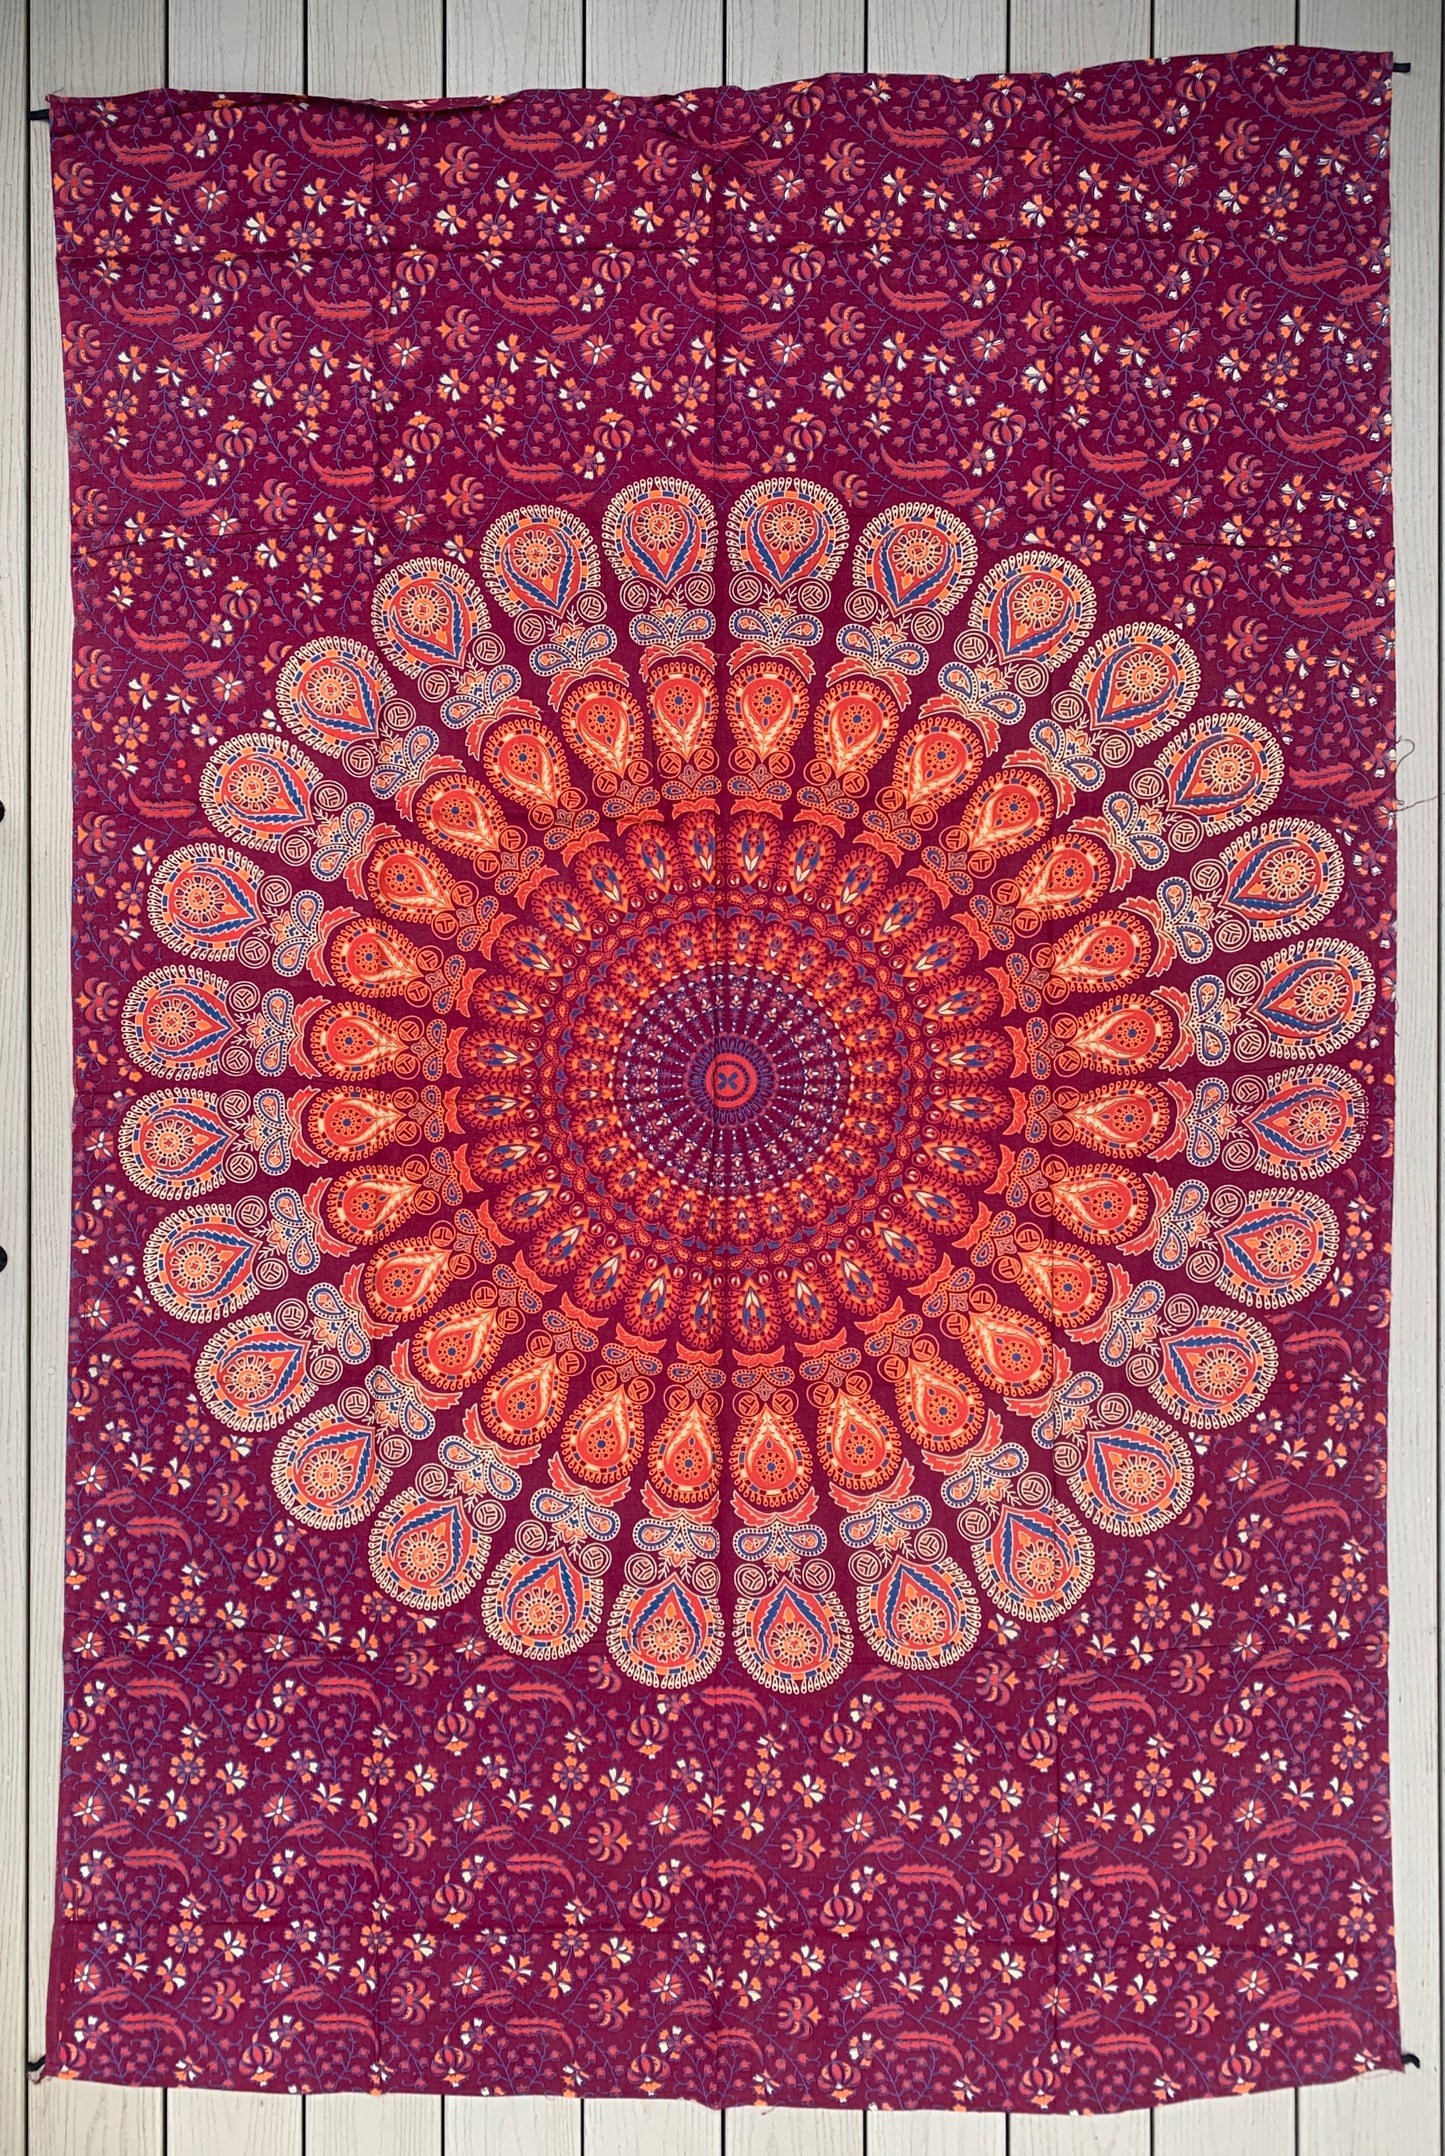 Lotus Mandala Tapestry Wall Hanging Decor 80”X50” Maroon